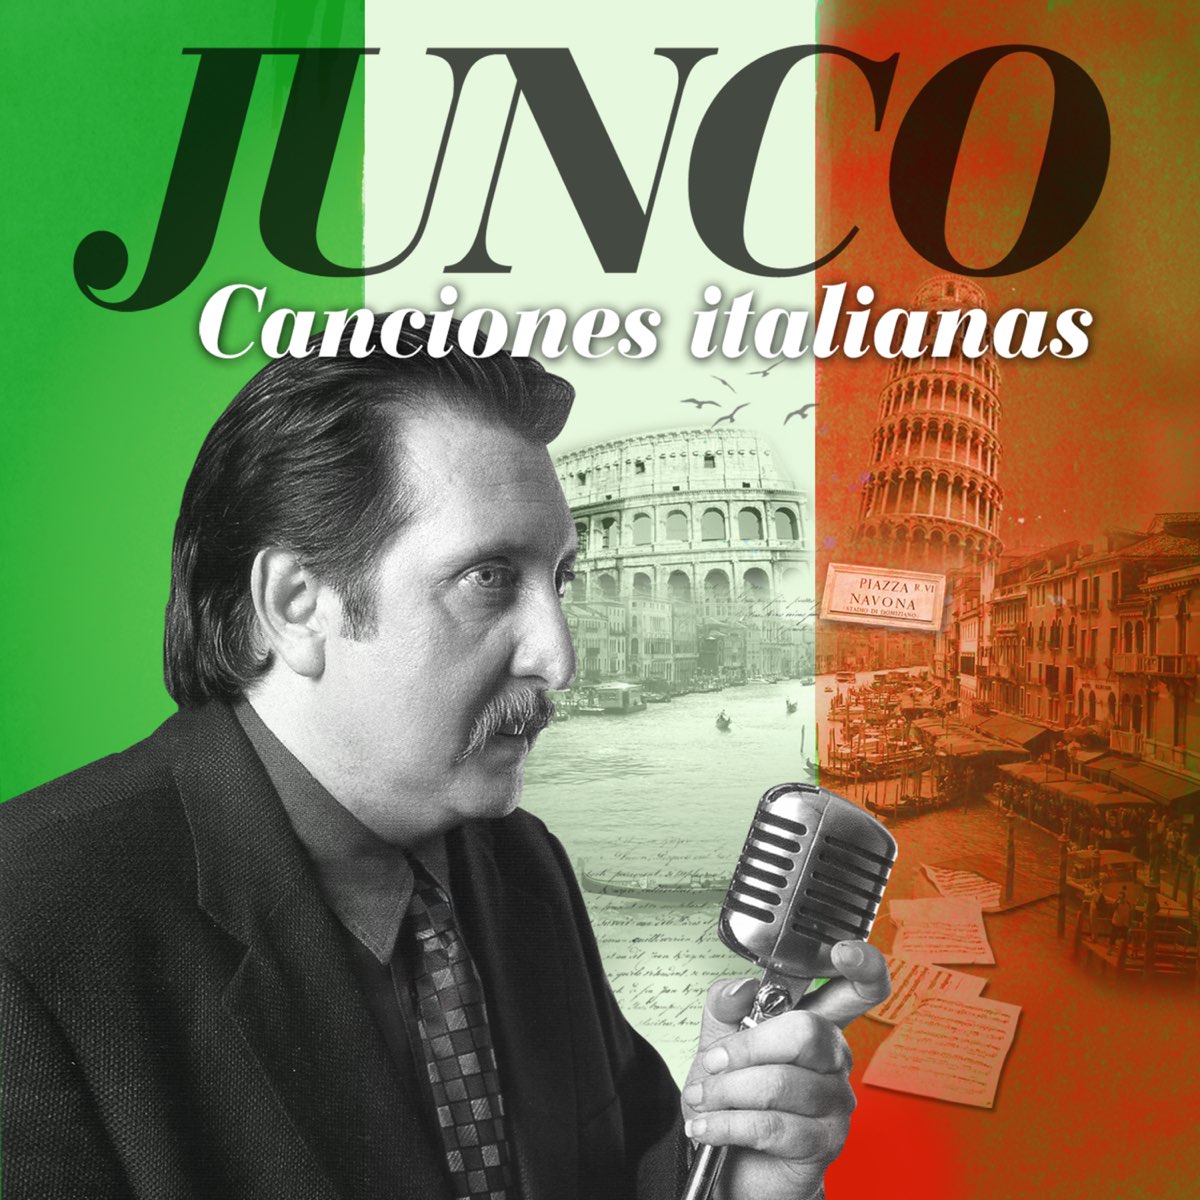 Canciones Italianas by Junco on Apple Music